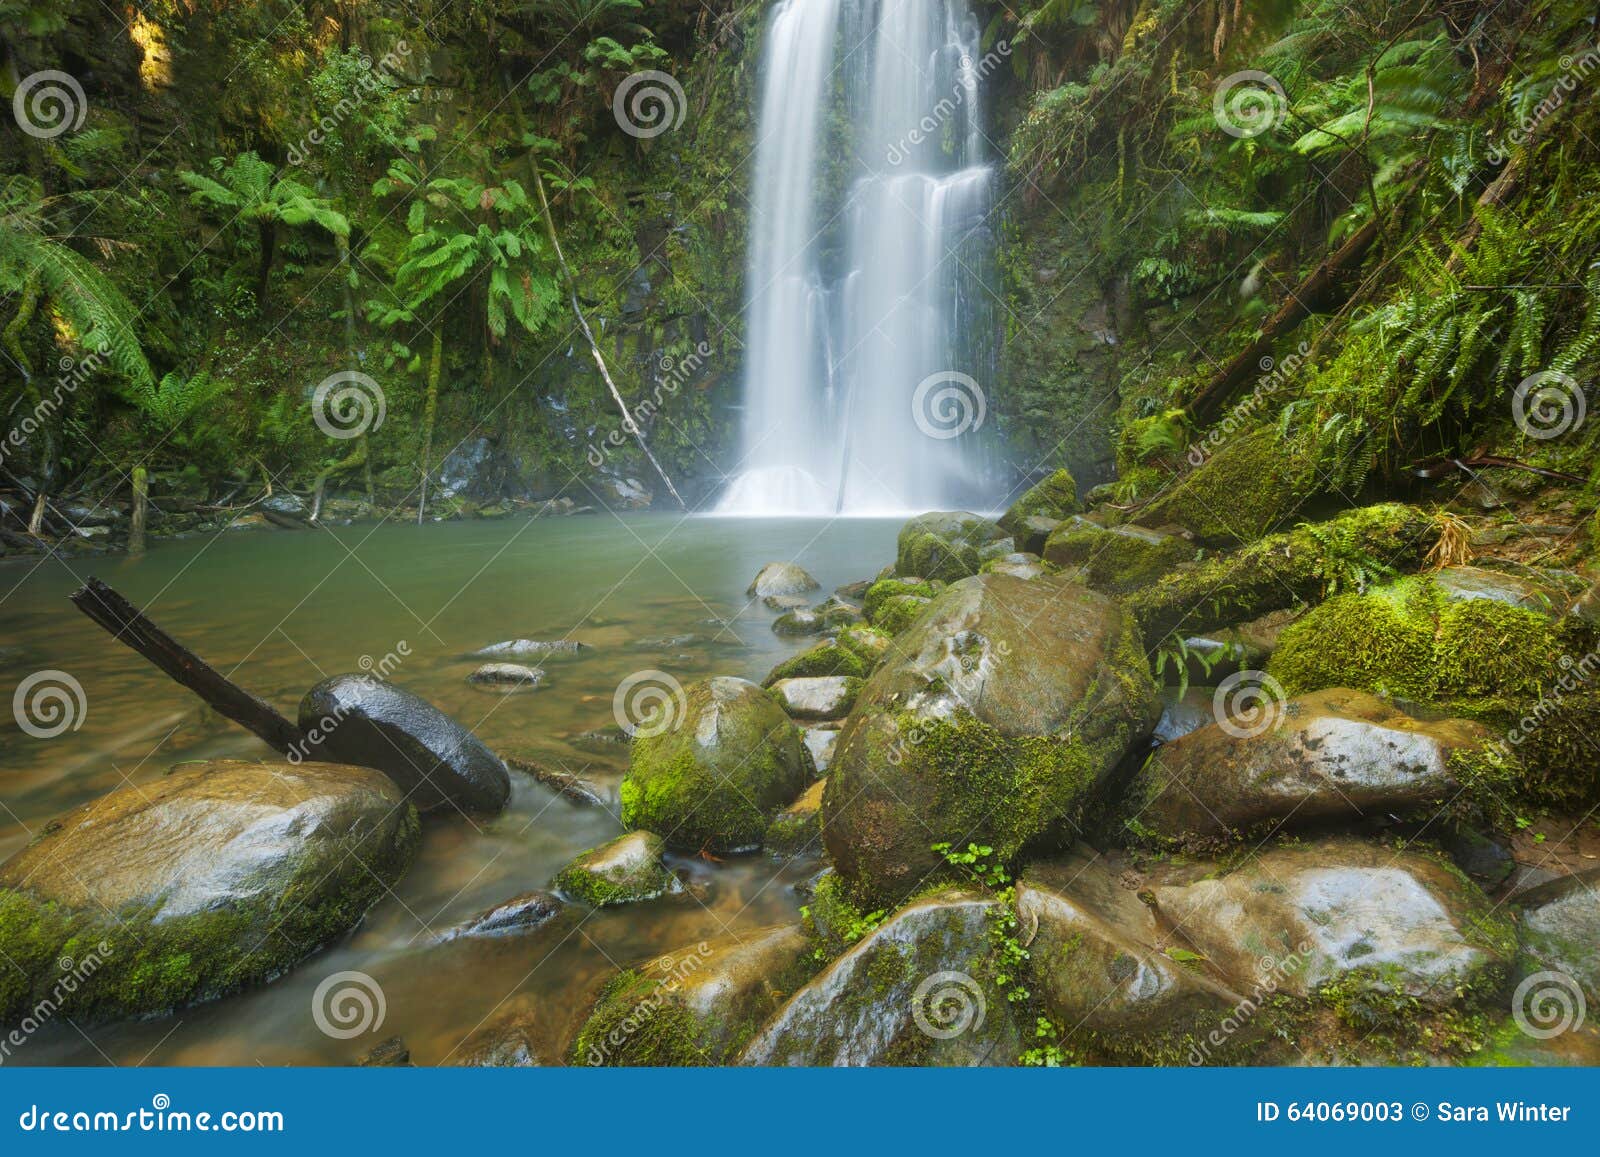 rainforest waterfalls, beauchamp falls, australia